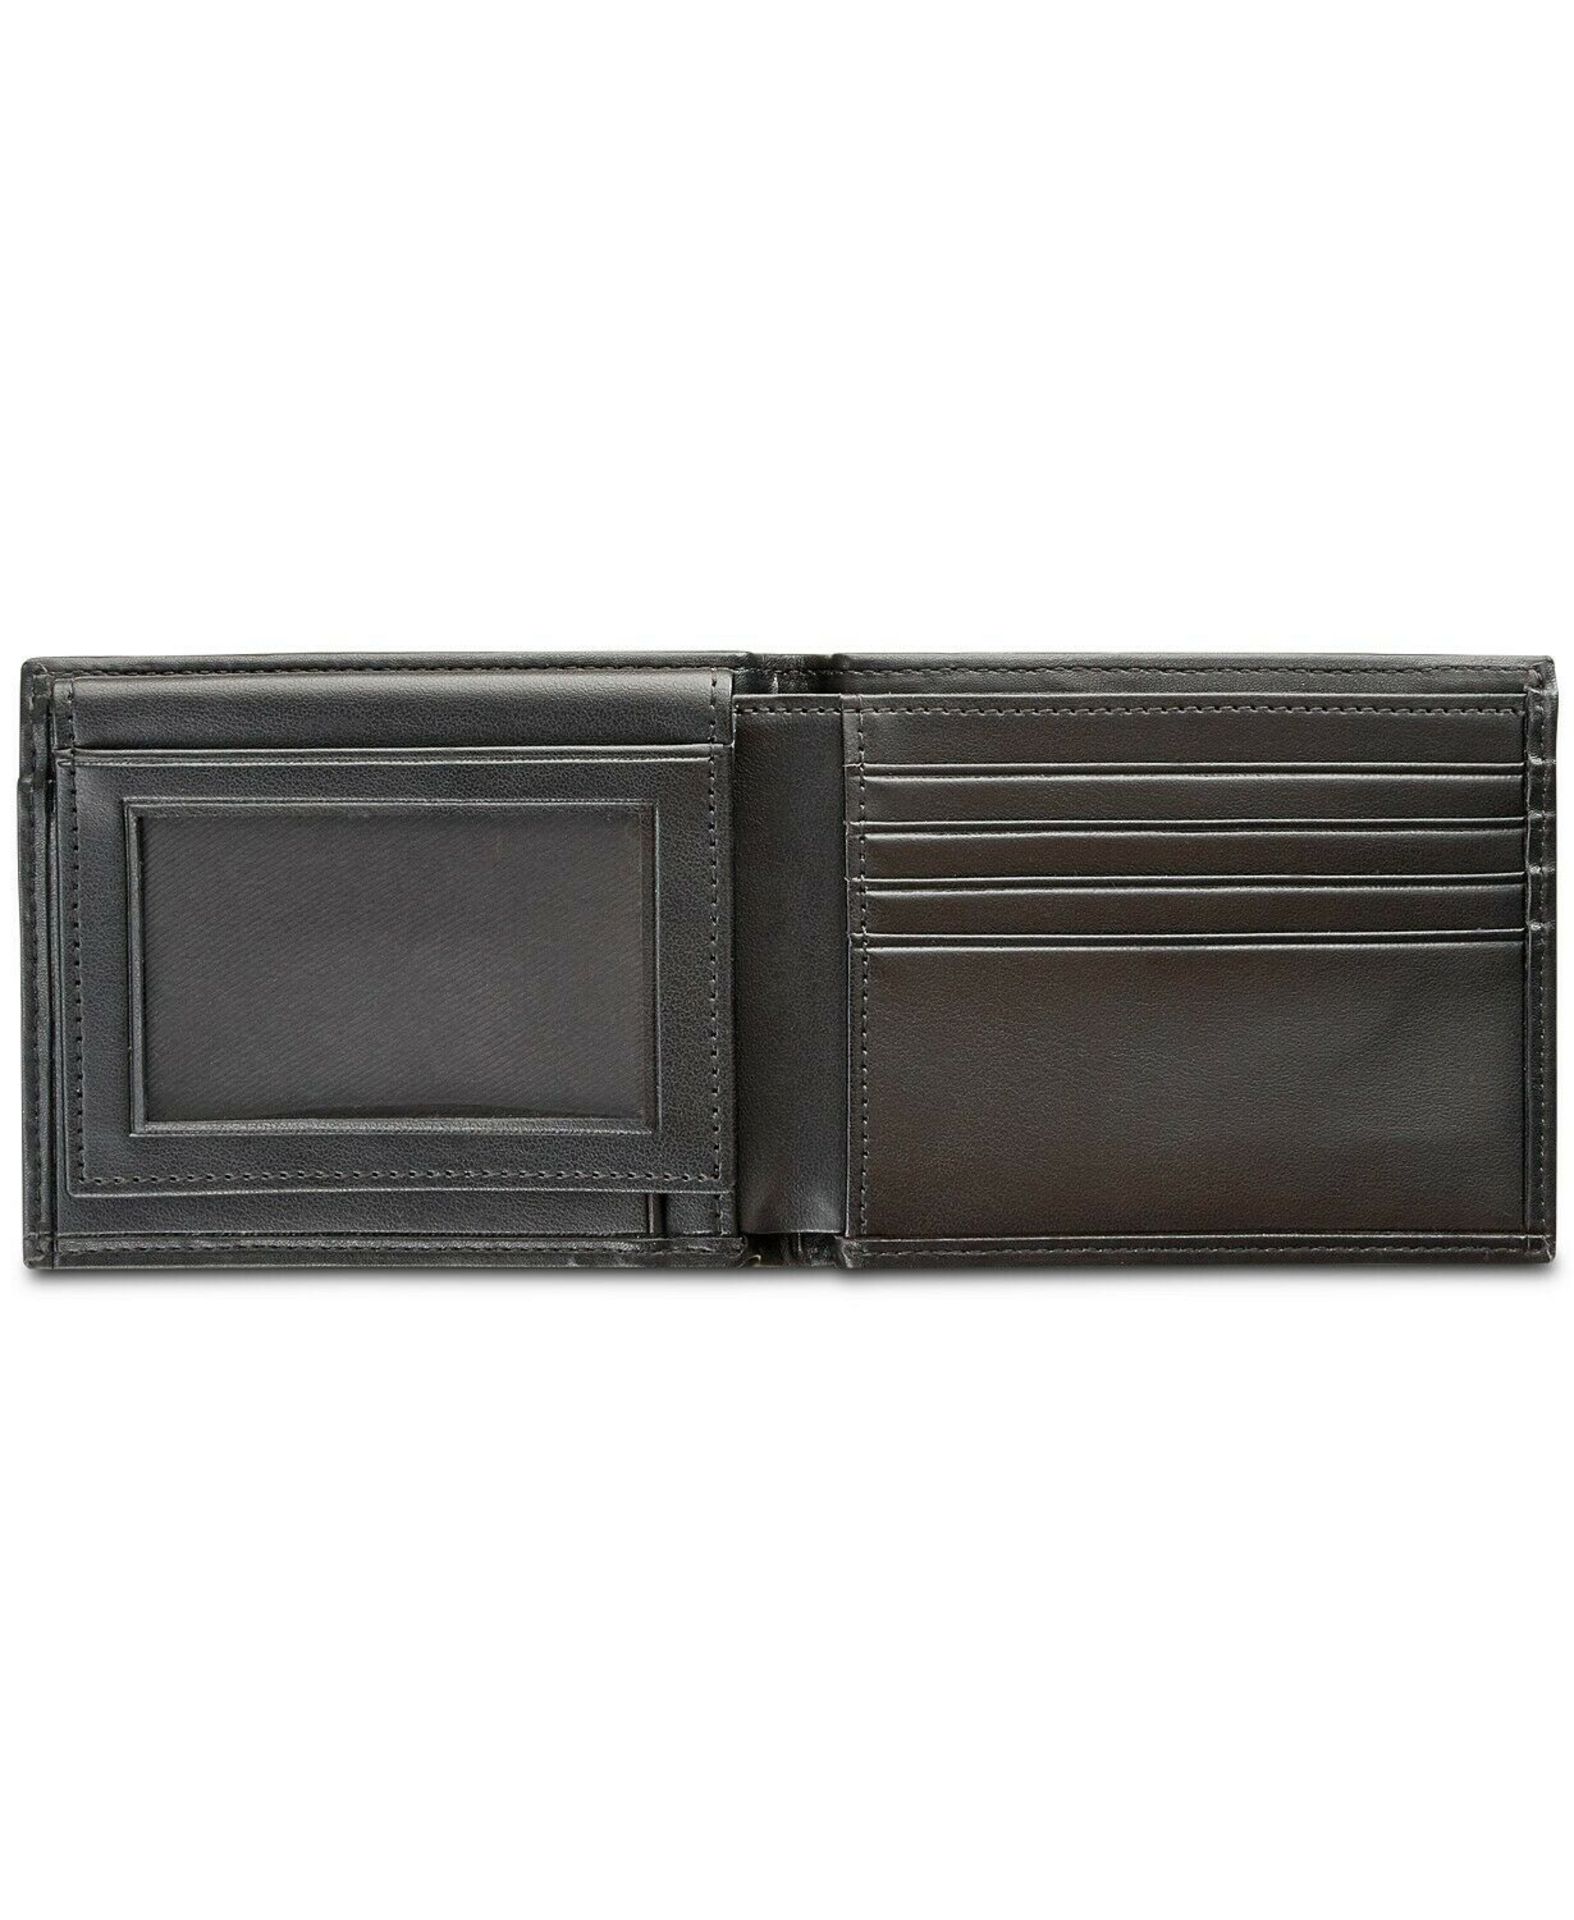 Perry Ellis Men's Wallet Black Manhattan Smooth Leather Bifold Passcase Rrp £35 - Image 2 of 3